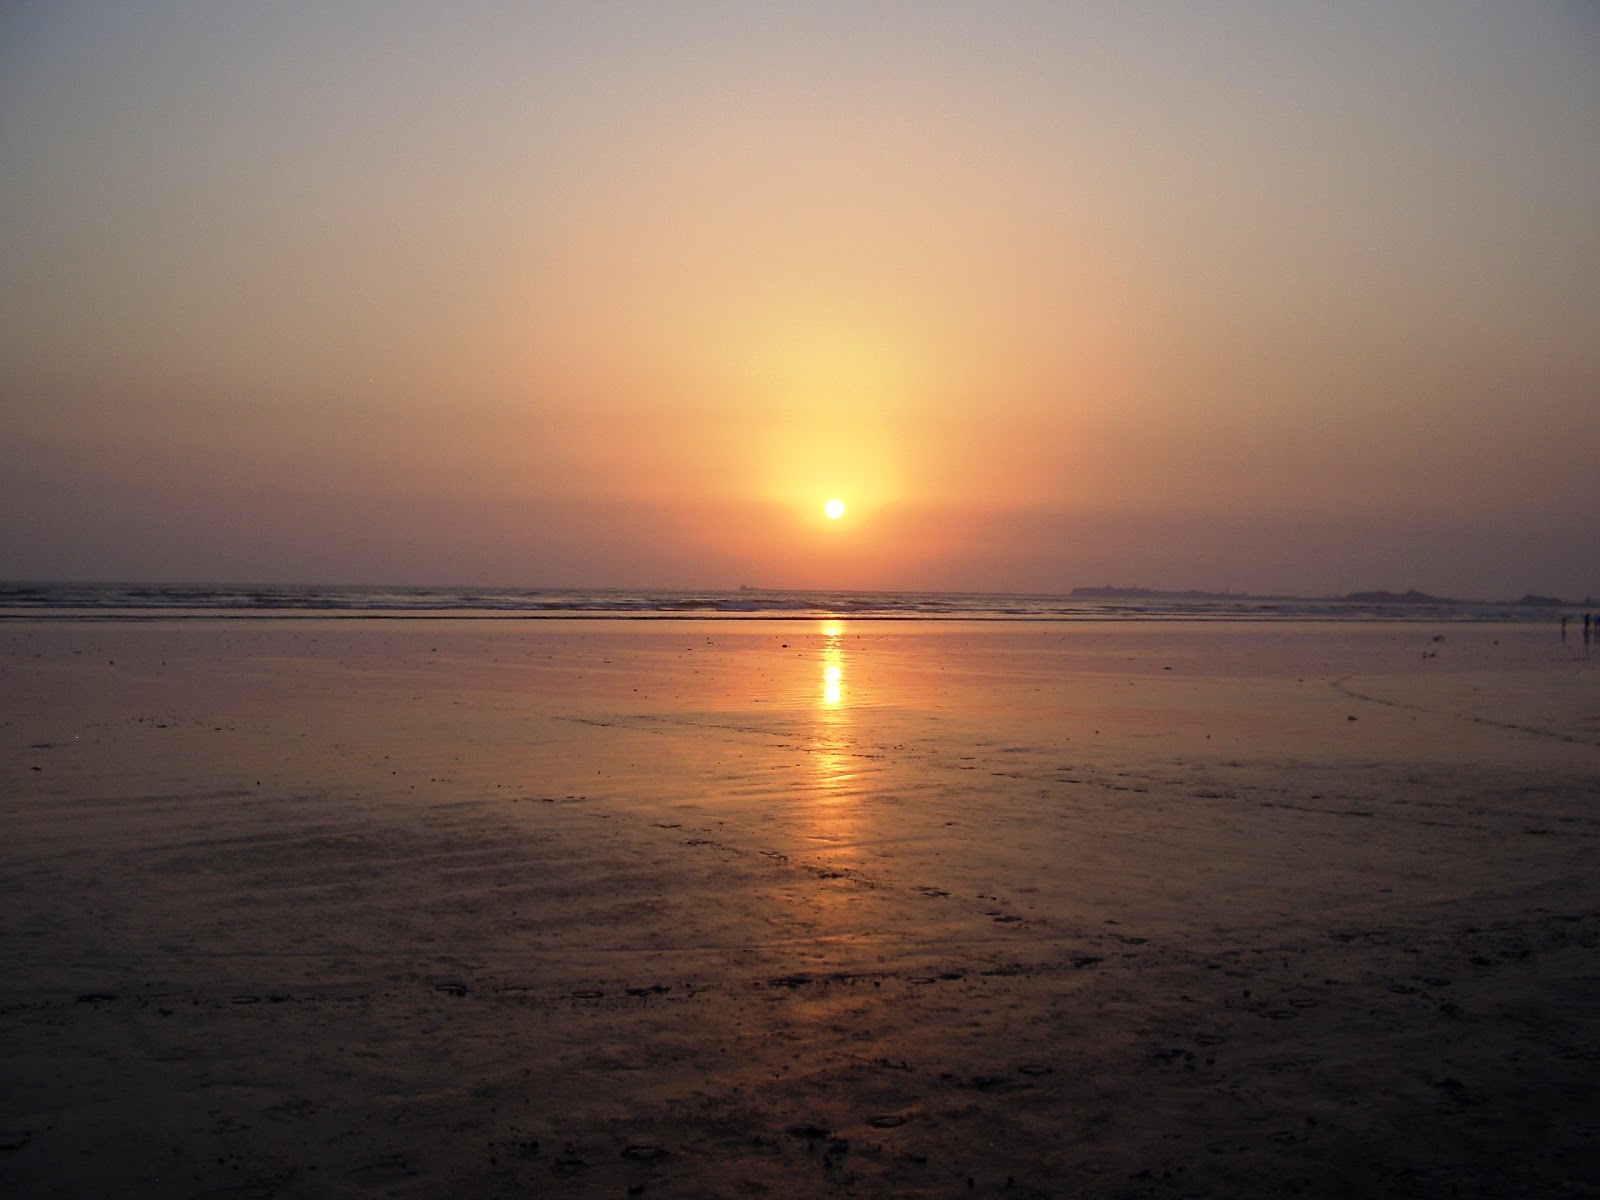 Sun-set-at-karachi-sea-view-wallpaper-background-laptop-desktop.JPG